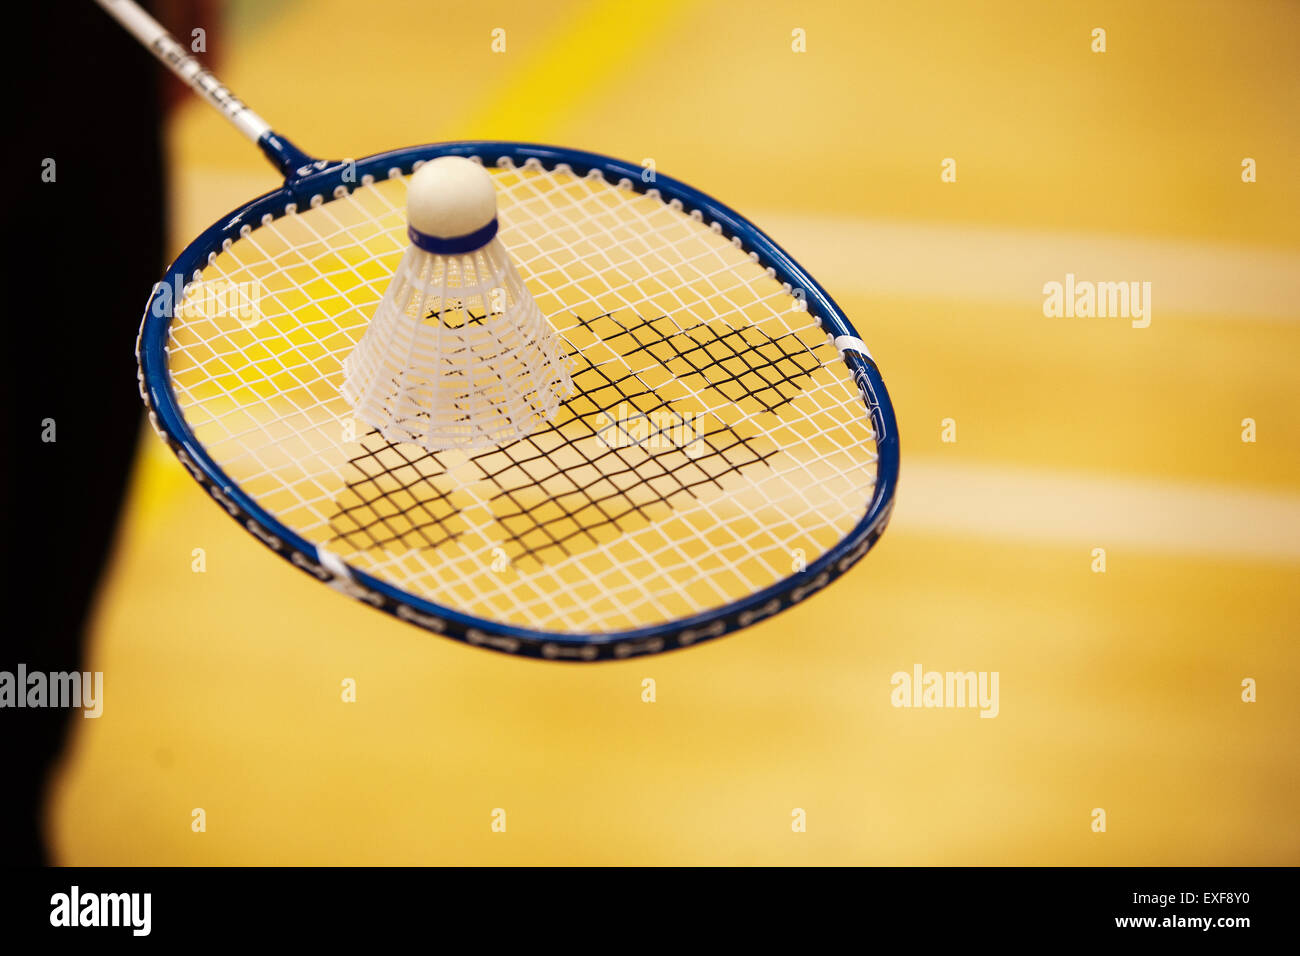 Shuttlecock on top of badminton racket Stock Photo